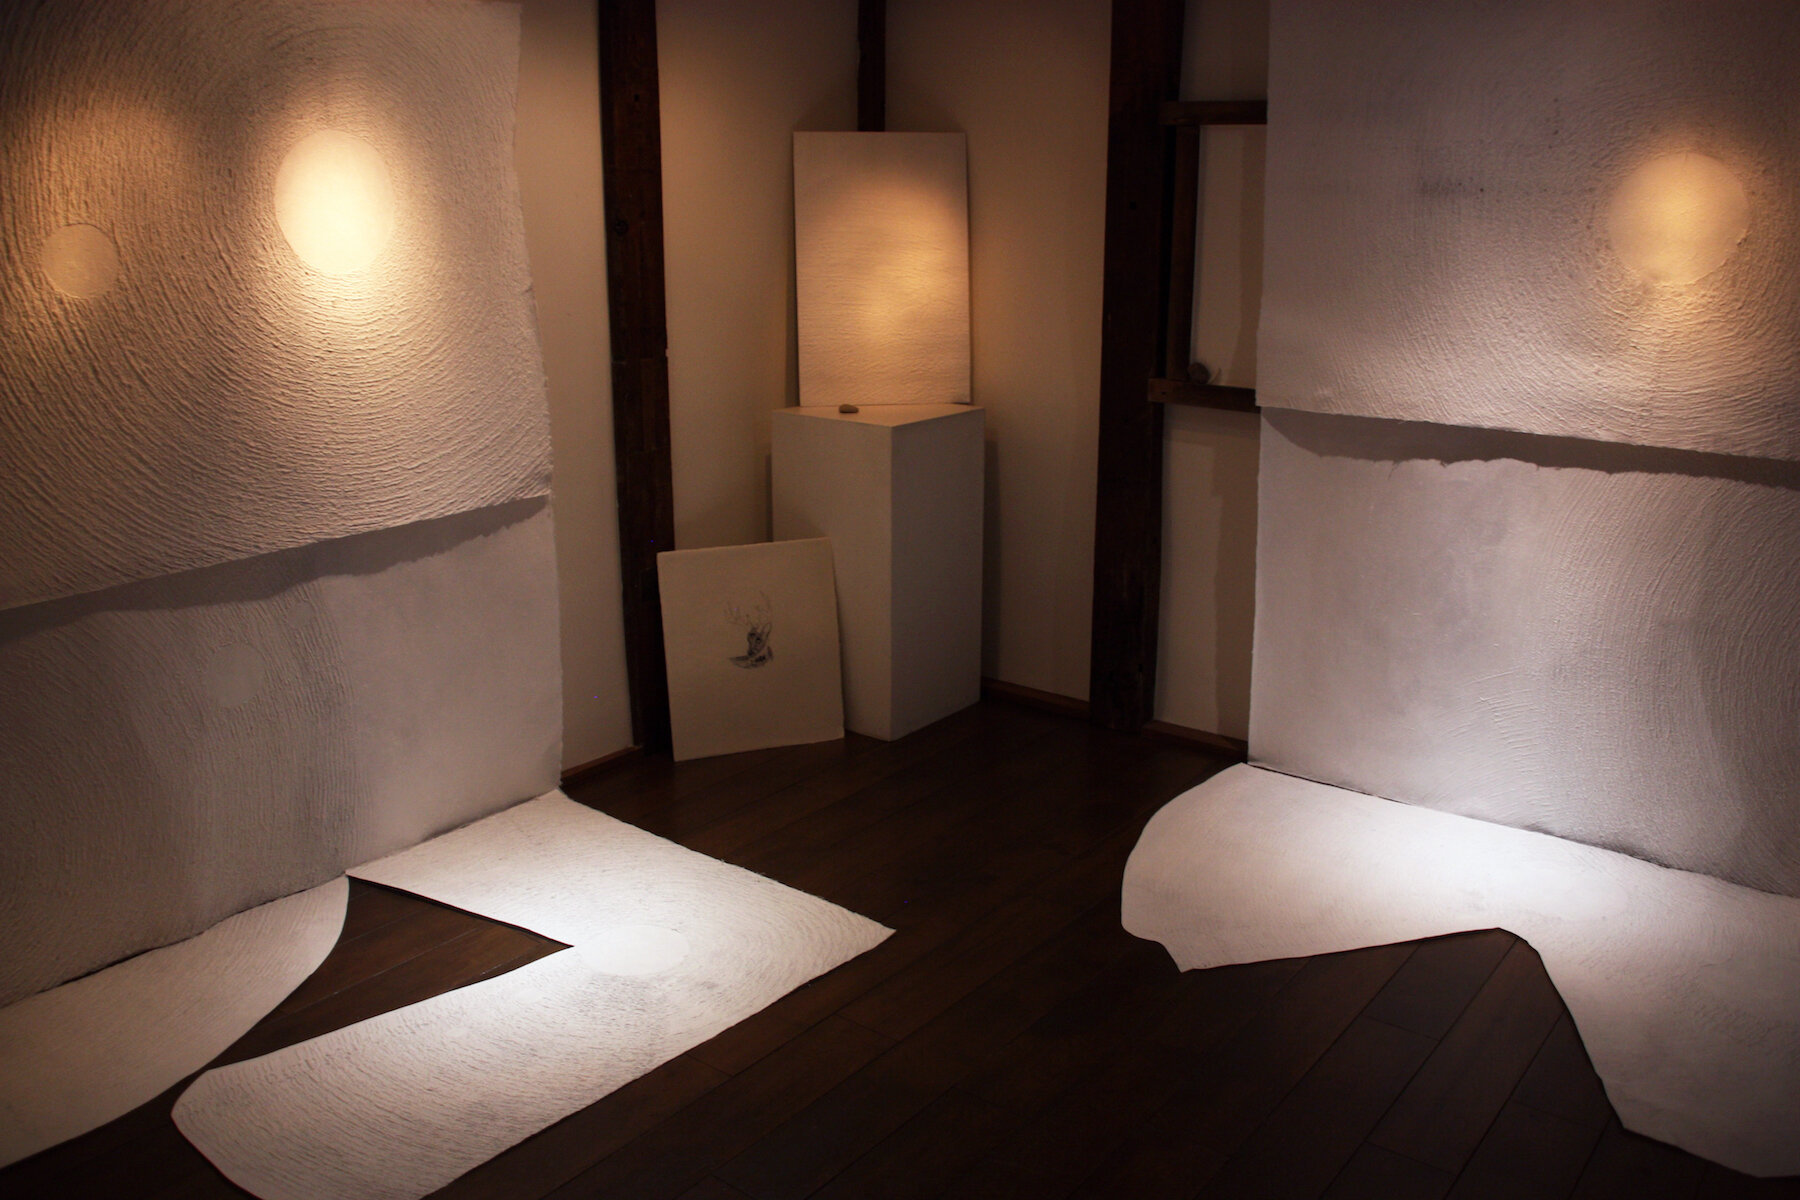    cavern of stars  , 2019 exhibition view (right)  handmade paper (kozo, mitsumata), sumi, LED  Gallery Yugen, Kyoto, Japan (renovated storehouse) 